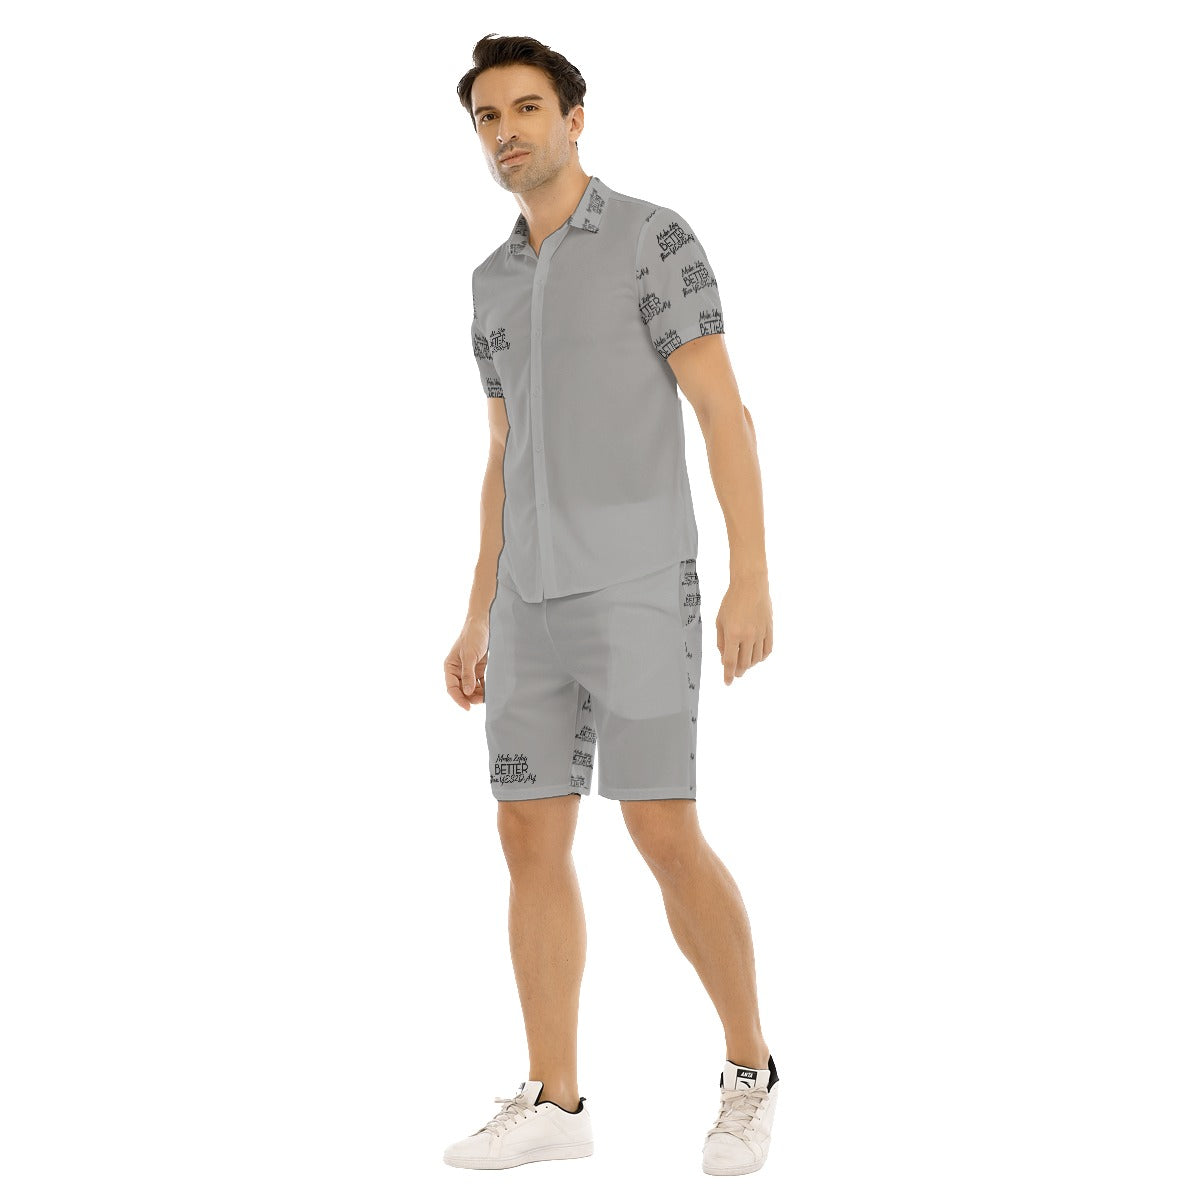 Men's Short Sleeve Shirt Set Make 2Day Better Then YES2DAY